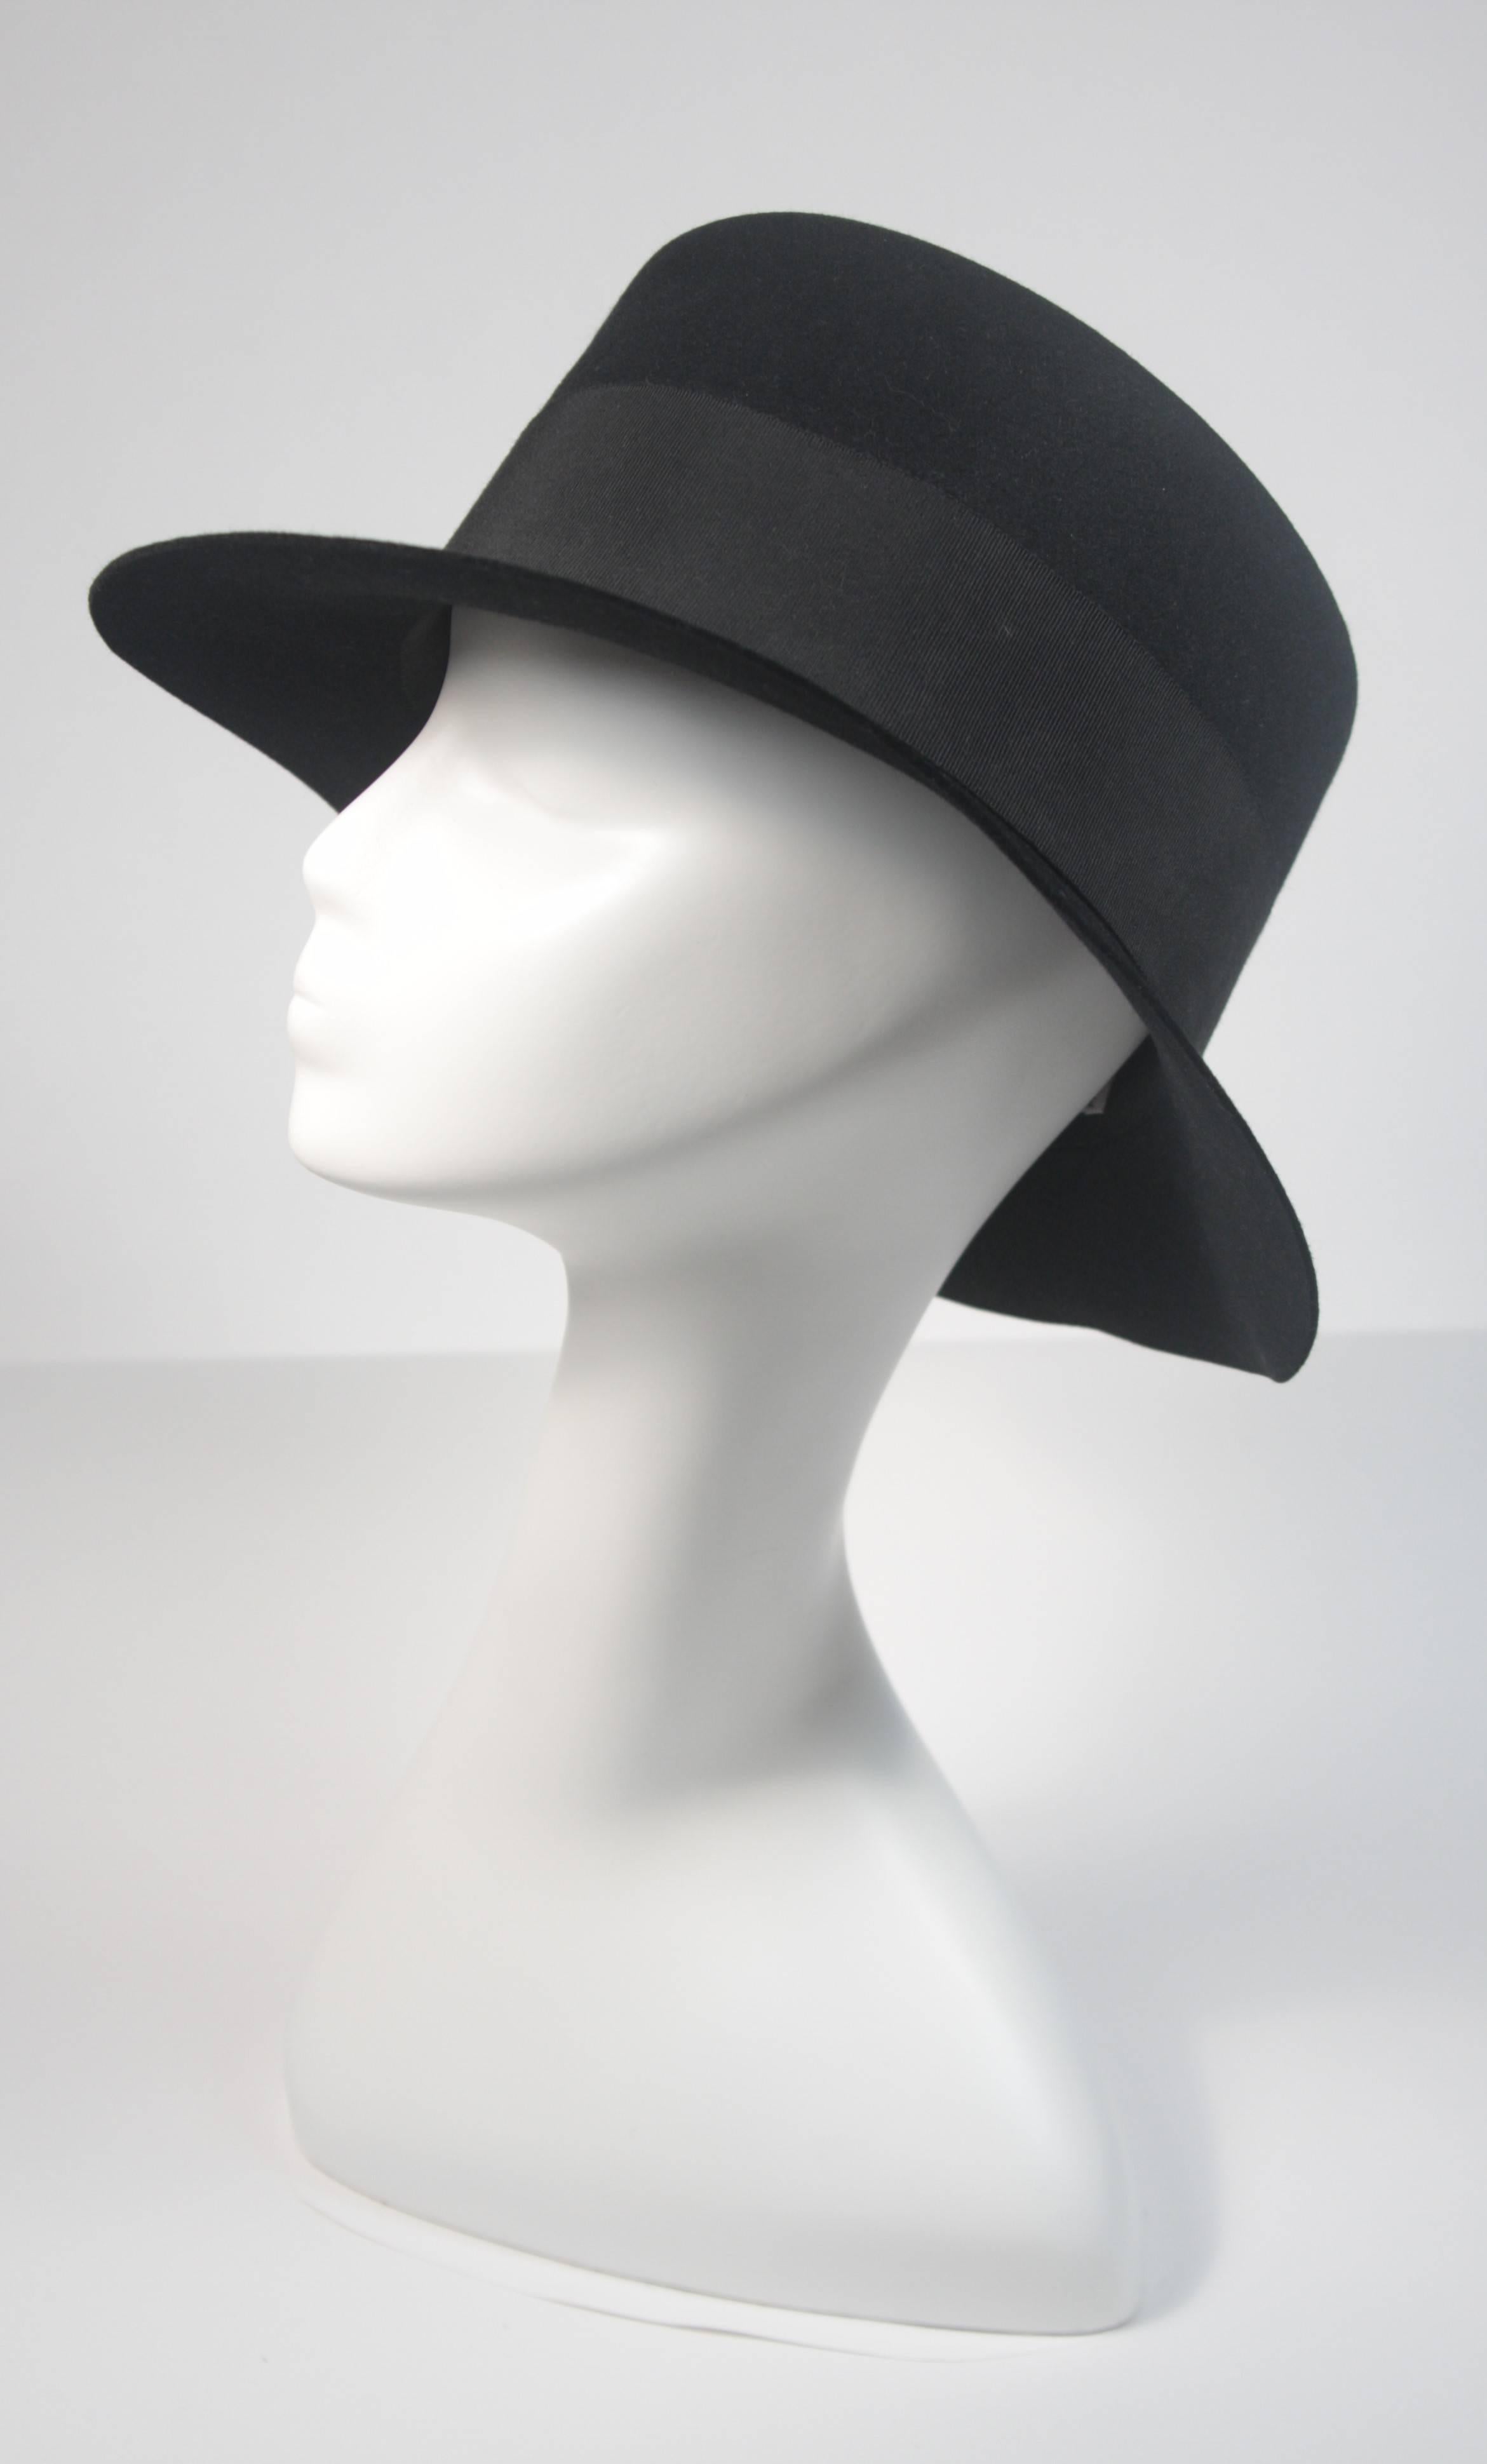 Gray Yves Saint Laurent Rive Gauche 1980's Black Wool Felt Hat with Curved Brim 59